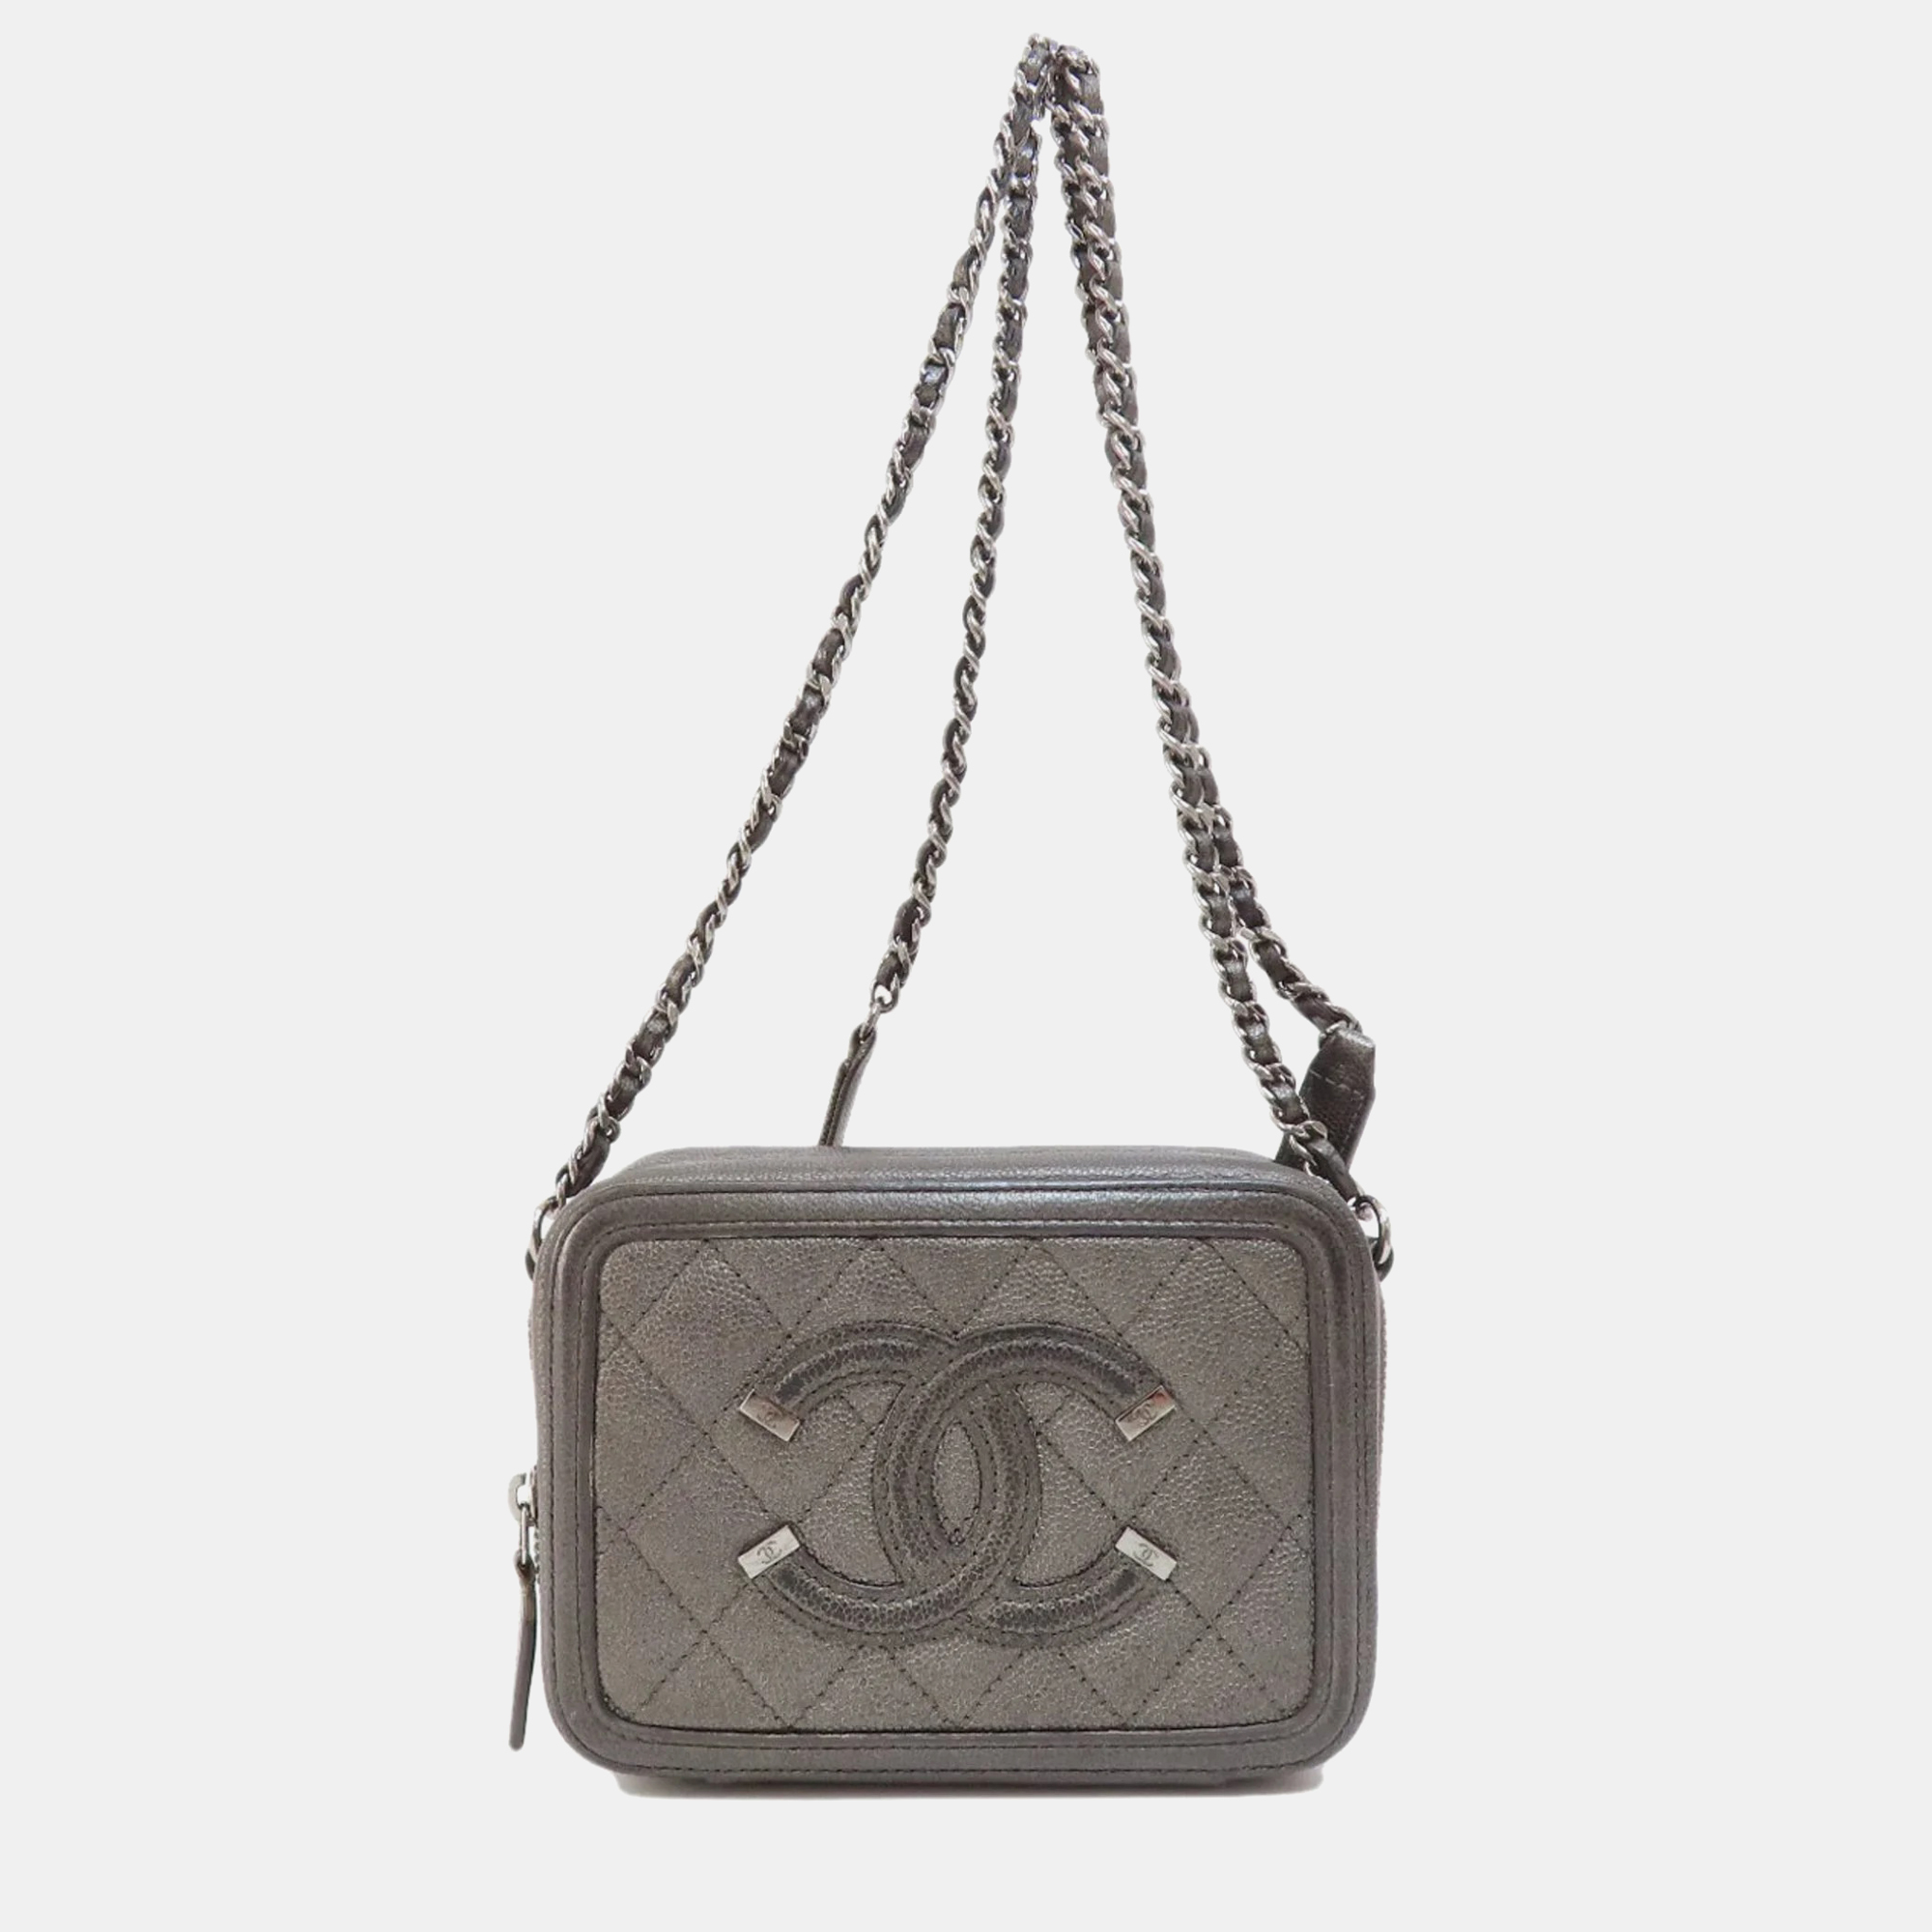 Chanel grey caviar leather filigree shoulder bags